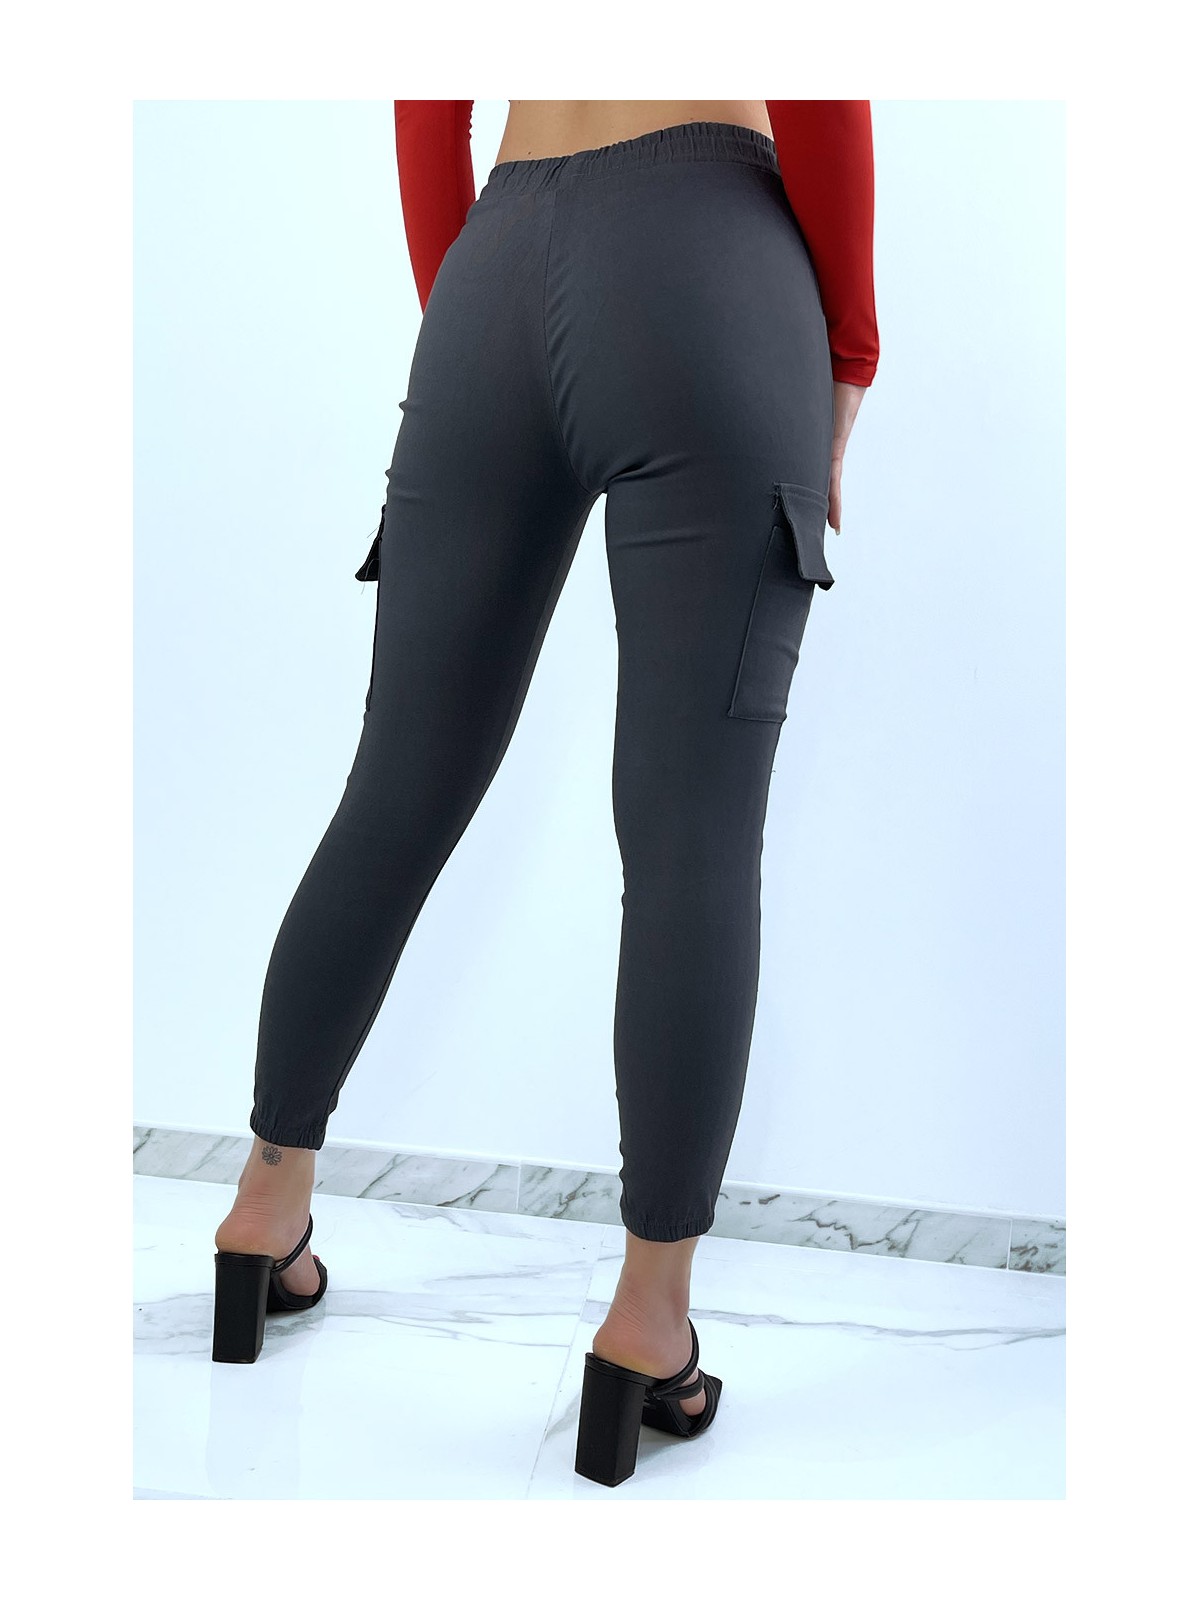 Pantalon slim anthracite elastique à grandes poches style cargo - 4